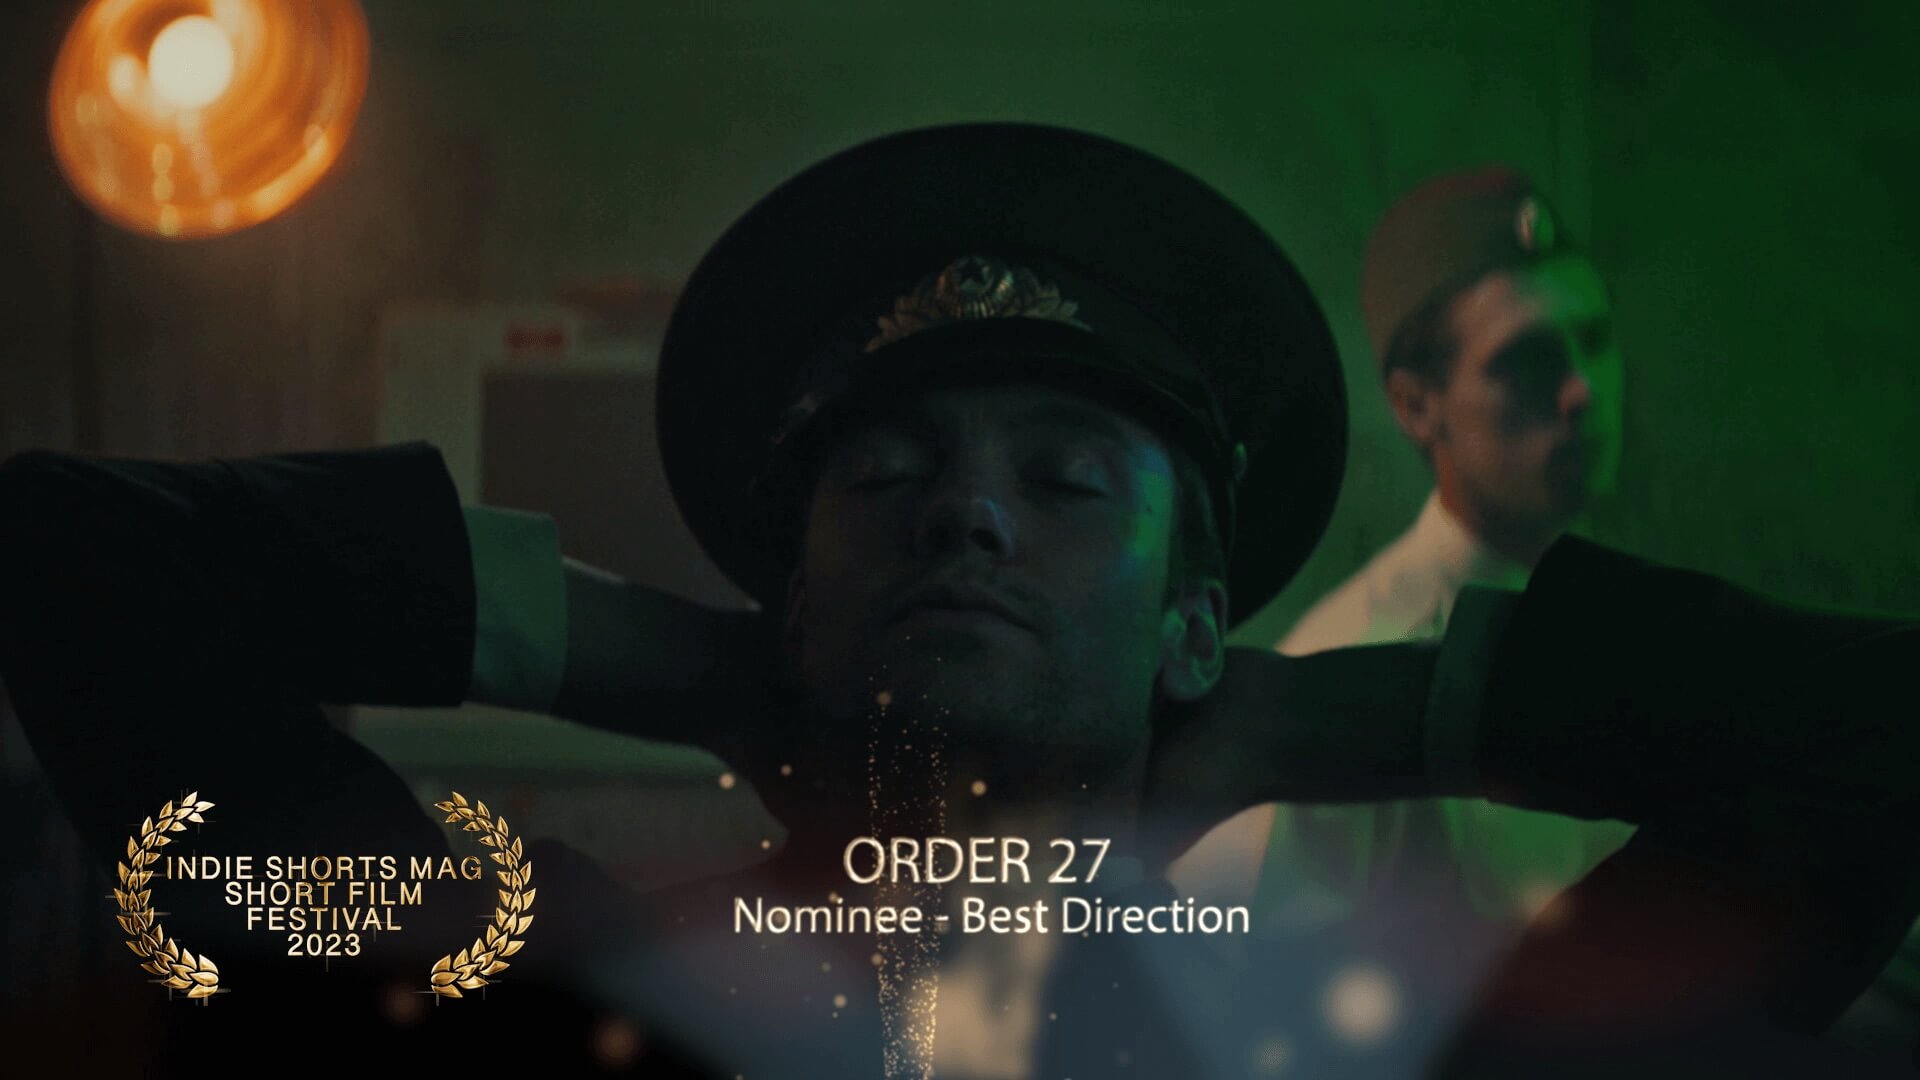 Indie Shorts Mag Short Film Festival - Best Direction - Nominee - Order 27